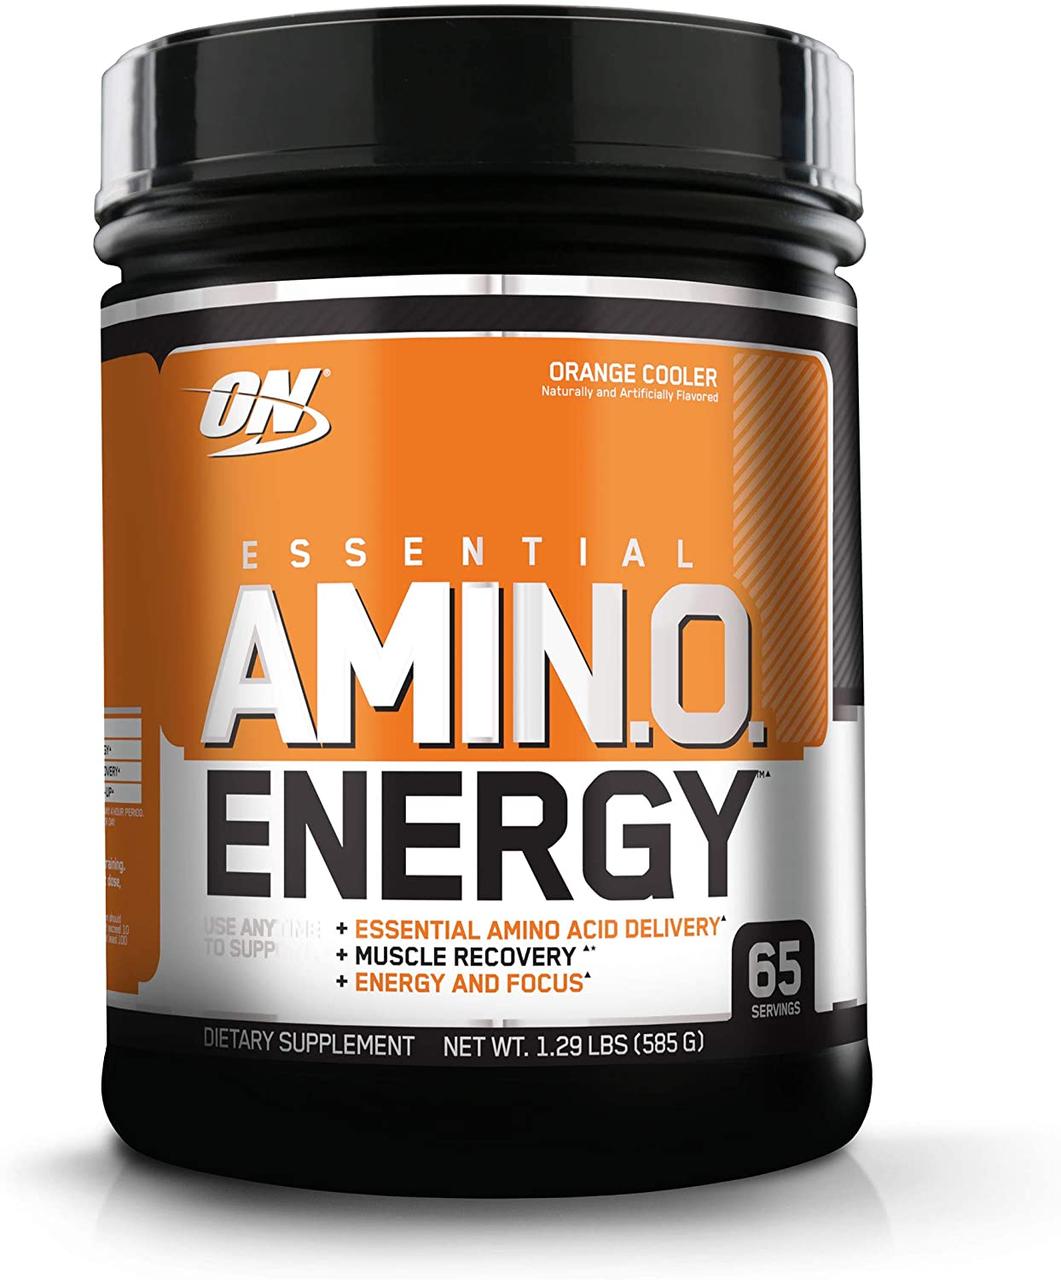 Комплекс аминокислот Optimum Nutrition Amino Energy (585 г) оптимум амино энерджи orange cooler,  мл, Optimum Nutrition. Аминокислотные комплексы. 